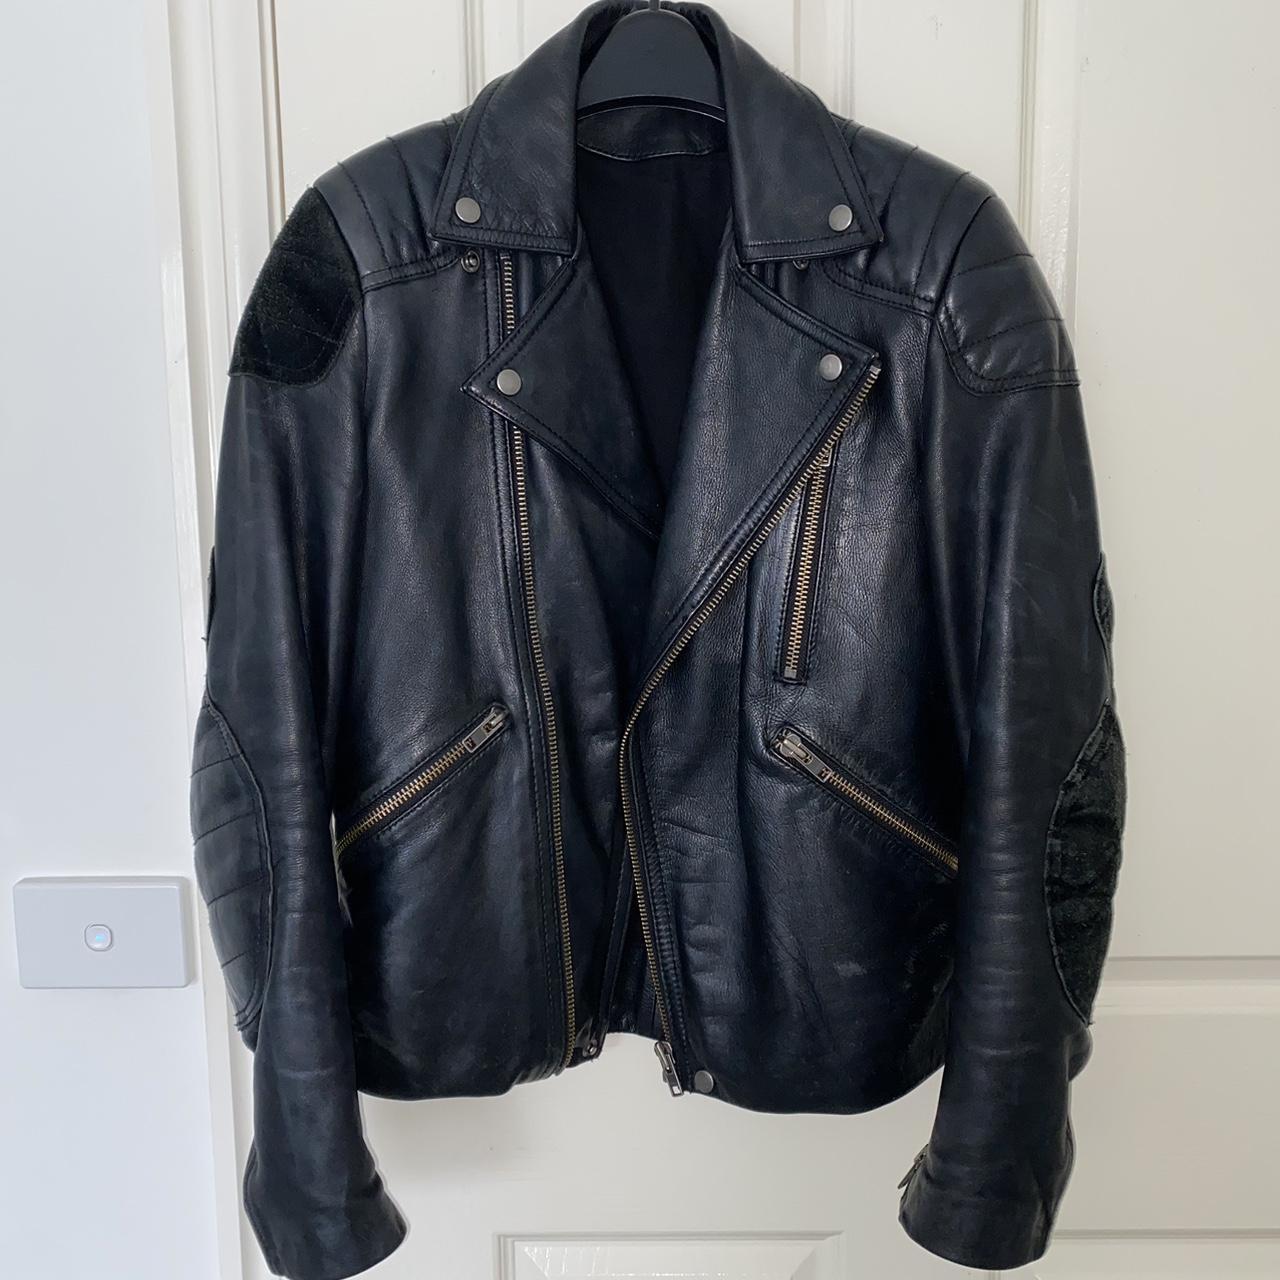 ACNE STUDIOS Leather Biker Jacket. The 'Theo' jacket... - Depop